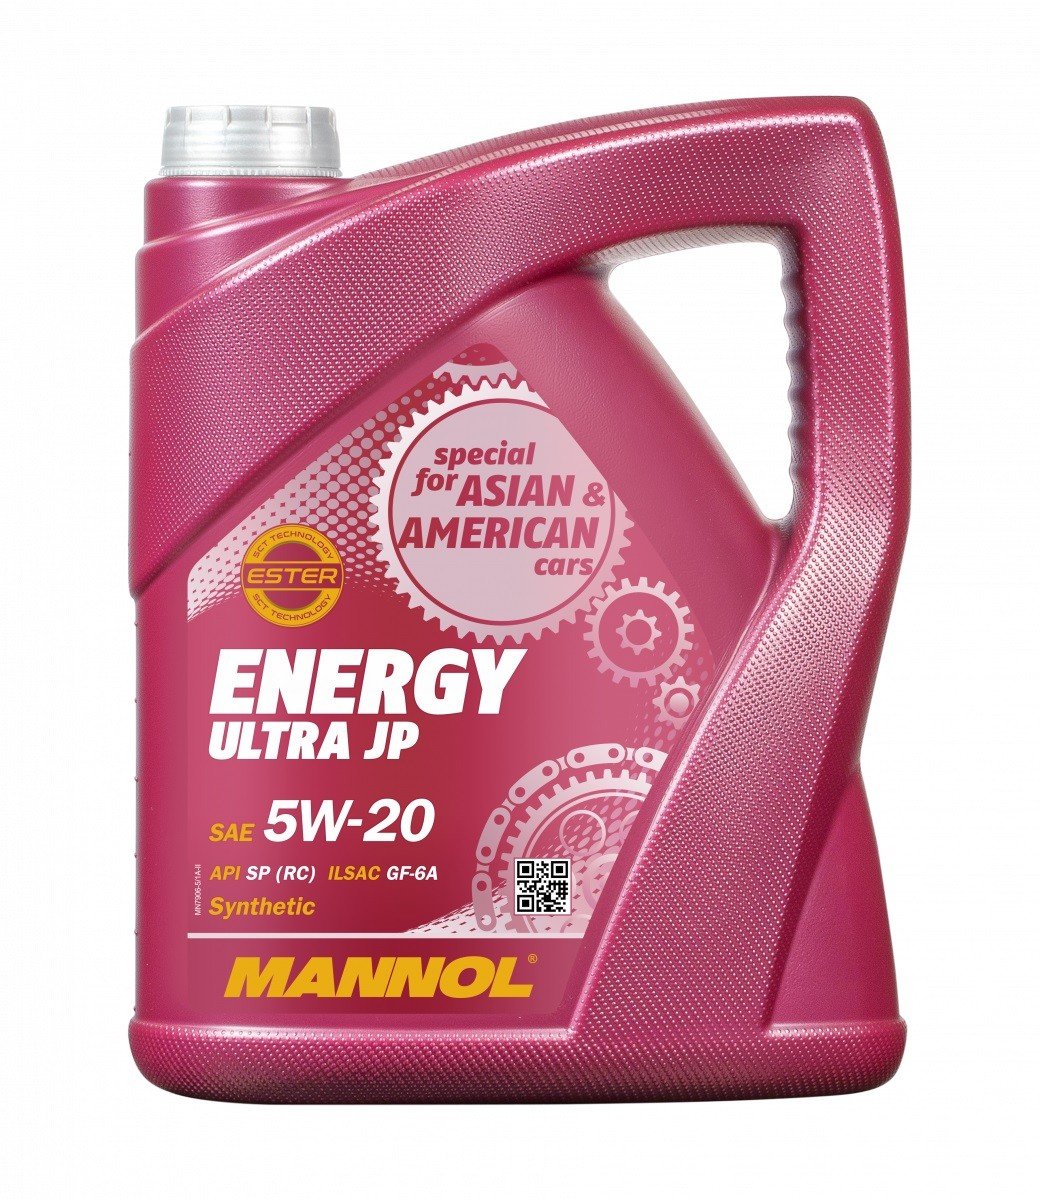 Mannol Energy ULTRA JP 5W-20 5L